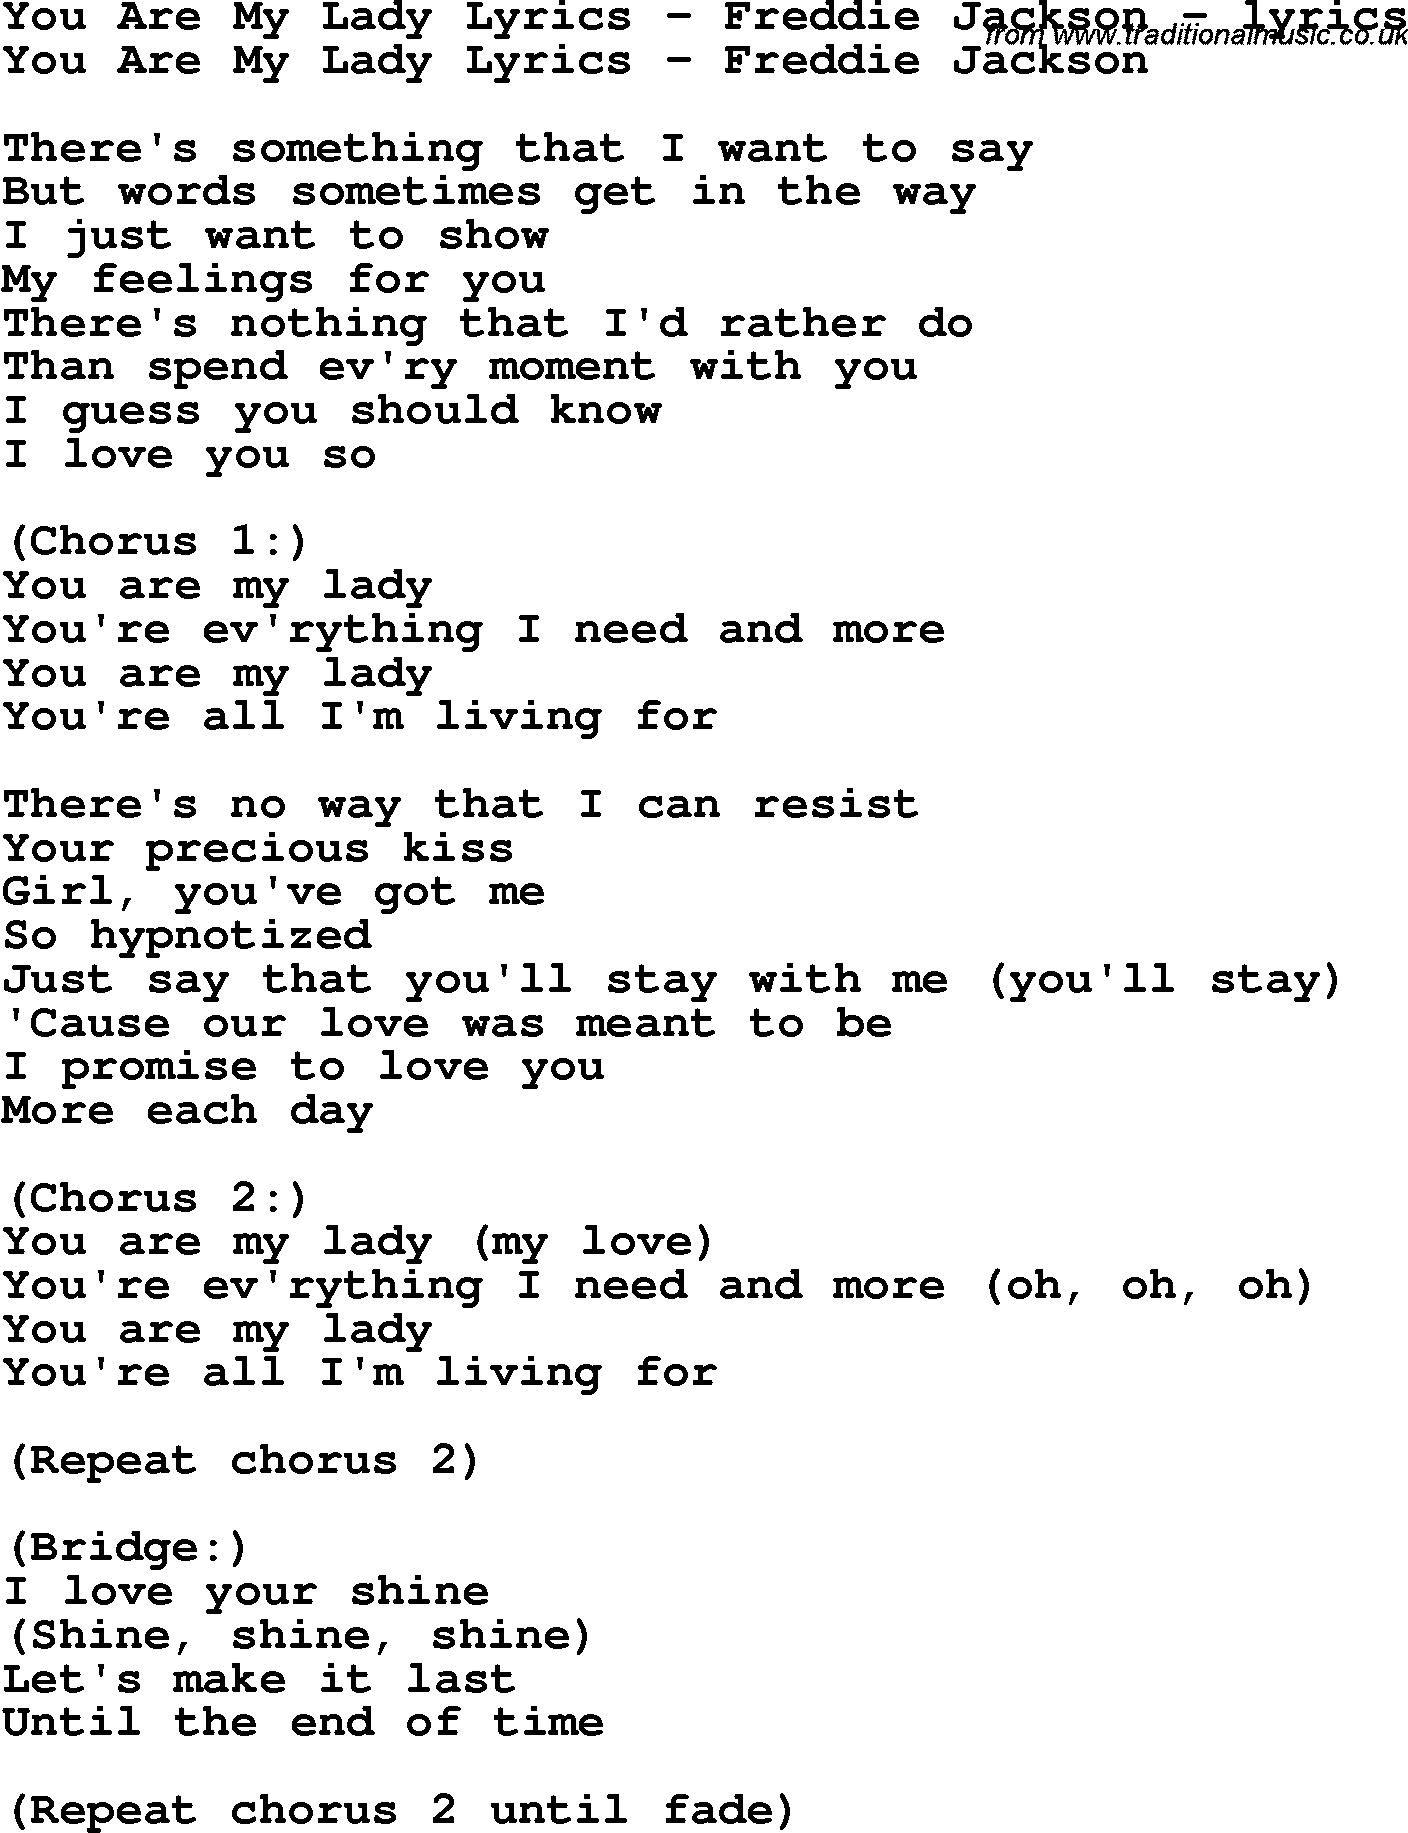 Love Song Lyrics for: You Are My Lady Lyrics - Freddie Jackson